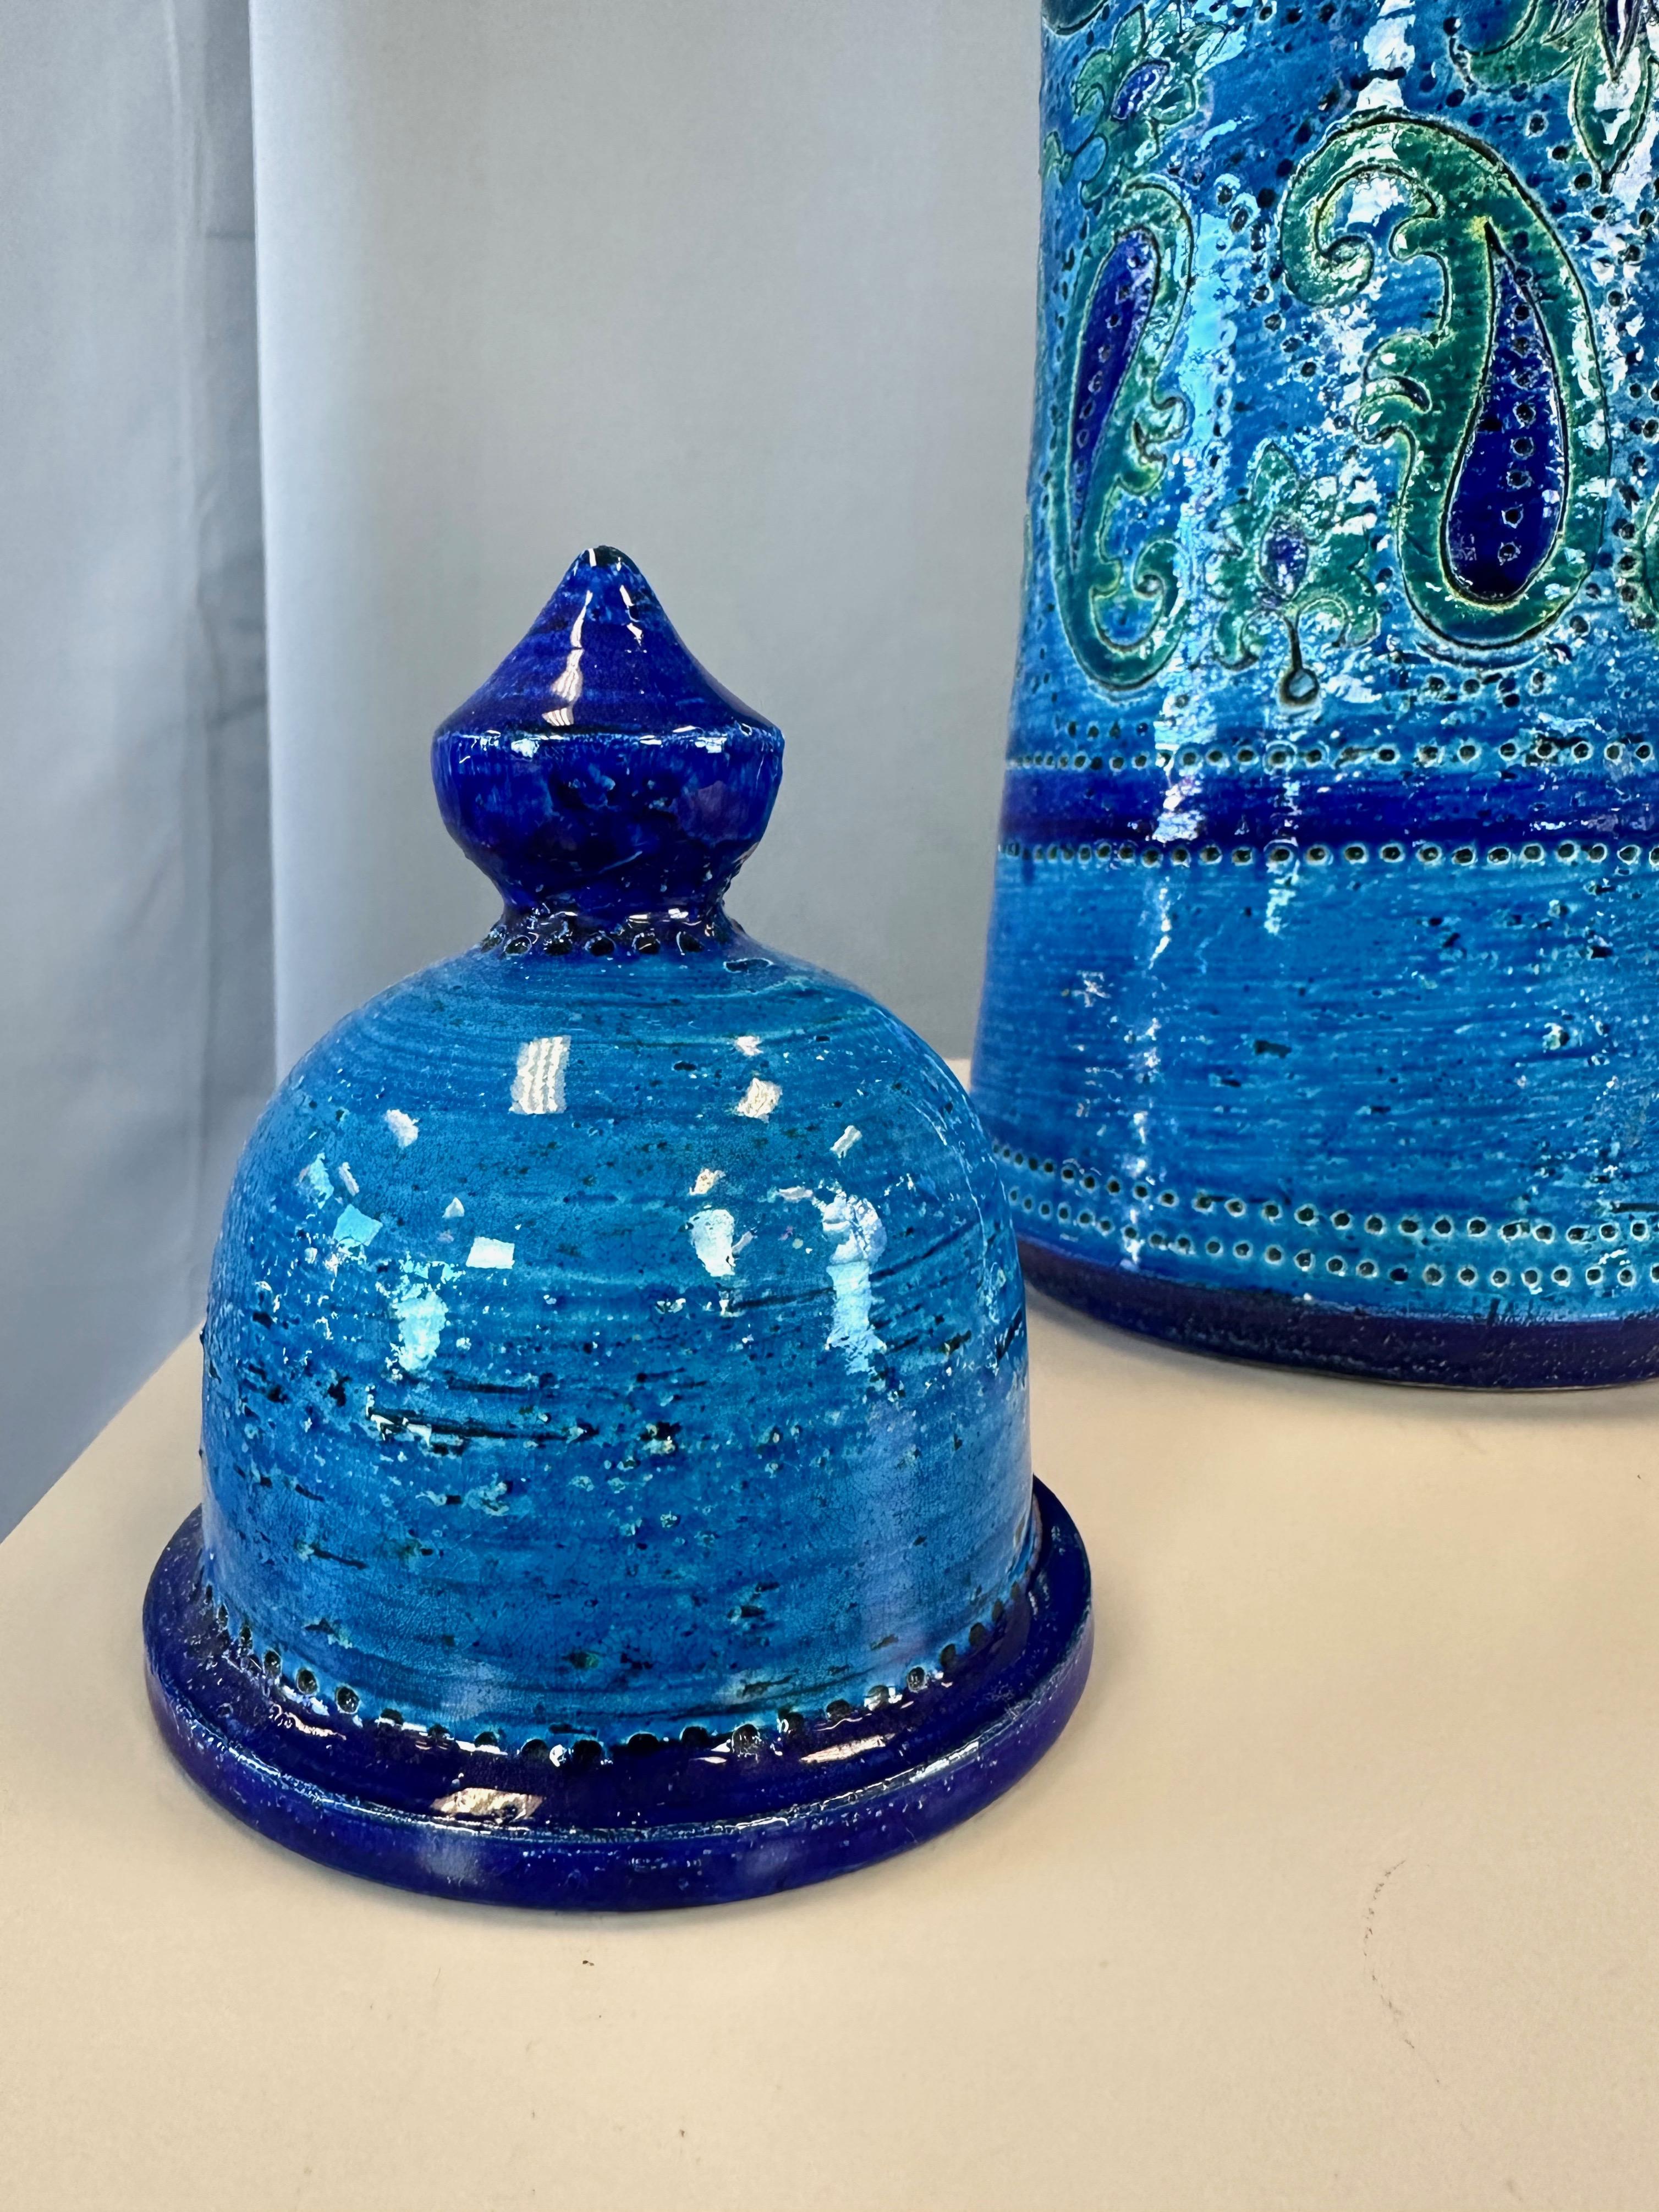 Aldo Londi for Bitossi Rimini Blue Tall Lidded Jar, 1960s For Sale 4